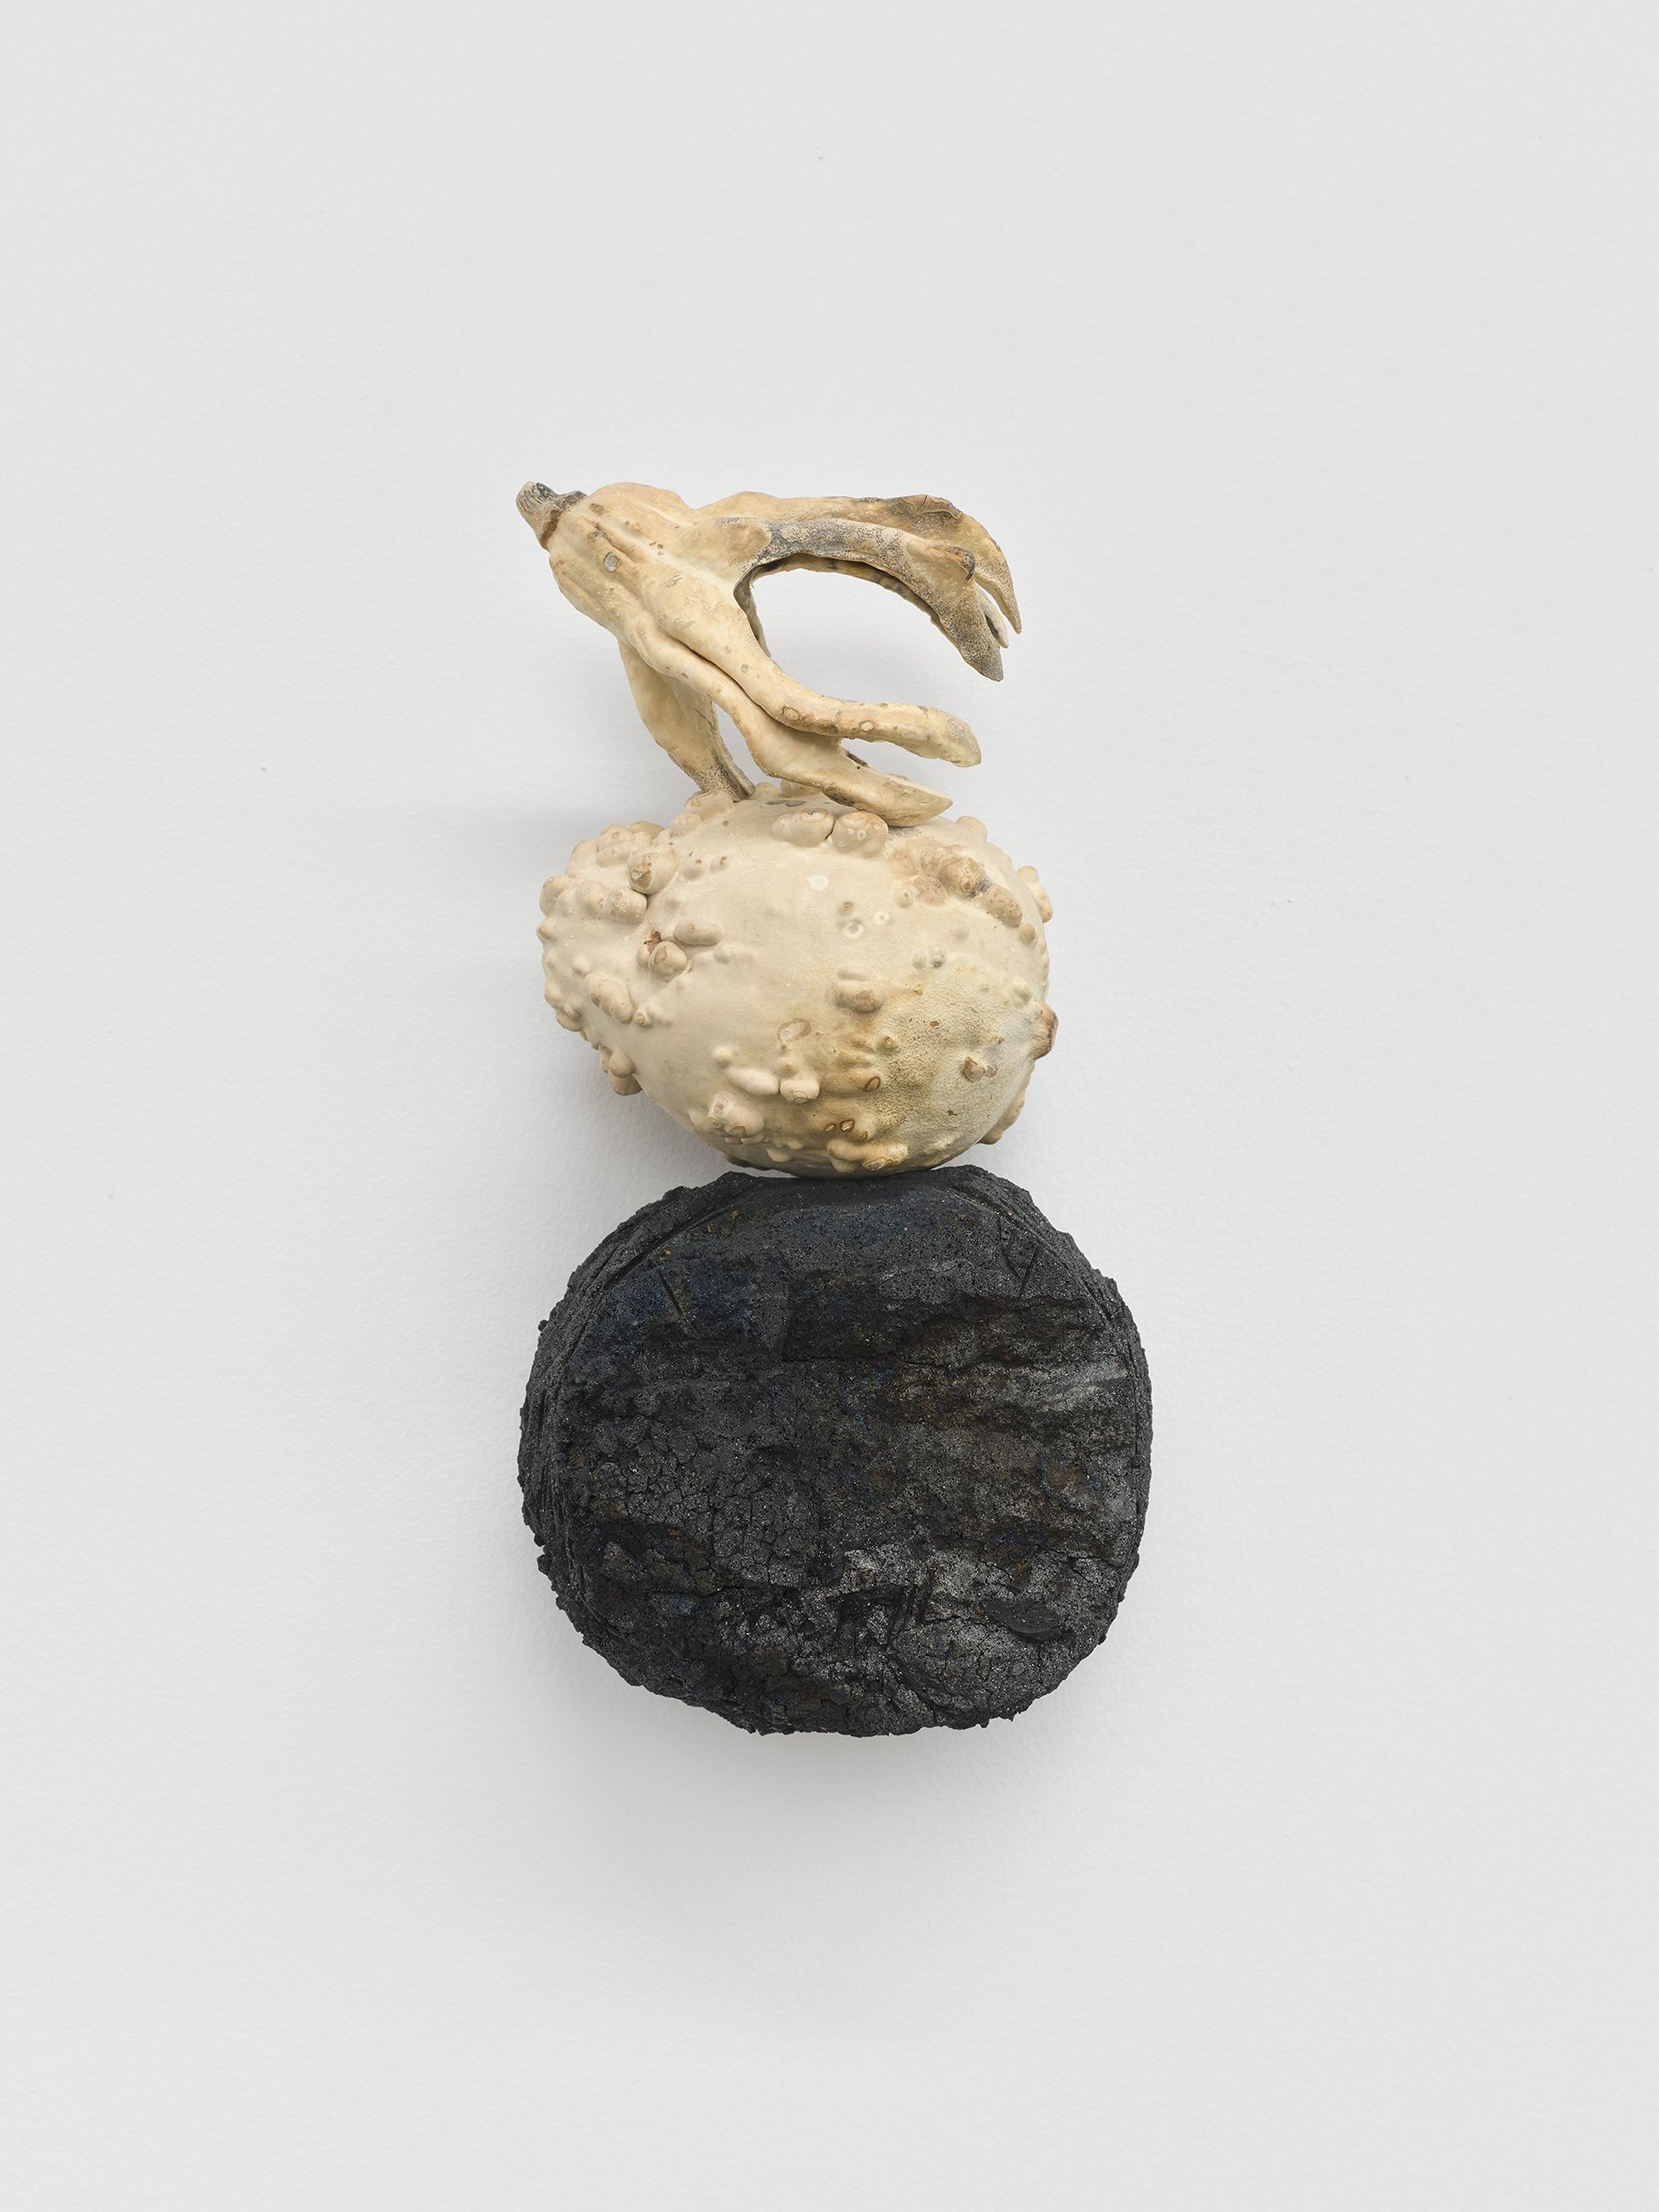  Dominic Palarchio  Untitled , 2020 gourds, petroleum coke, hardware  9 x 5 x 3 inches (23 x 13 x 8 cm)  (DP1) 